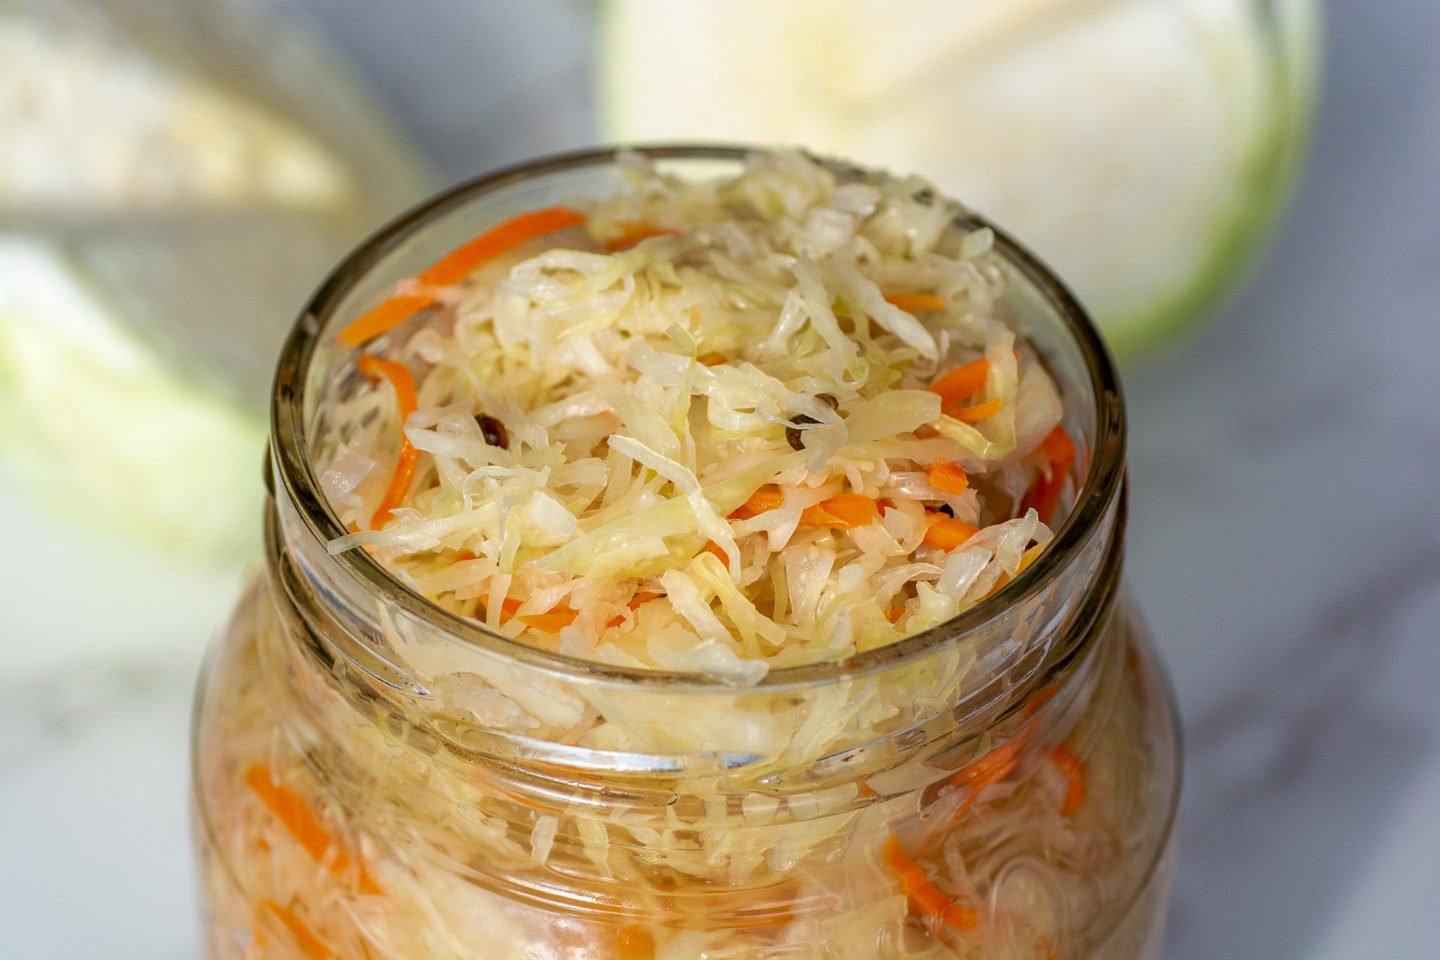 store keto sauerkraut in a glass jar